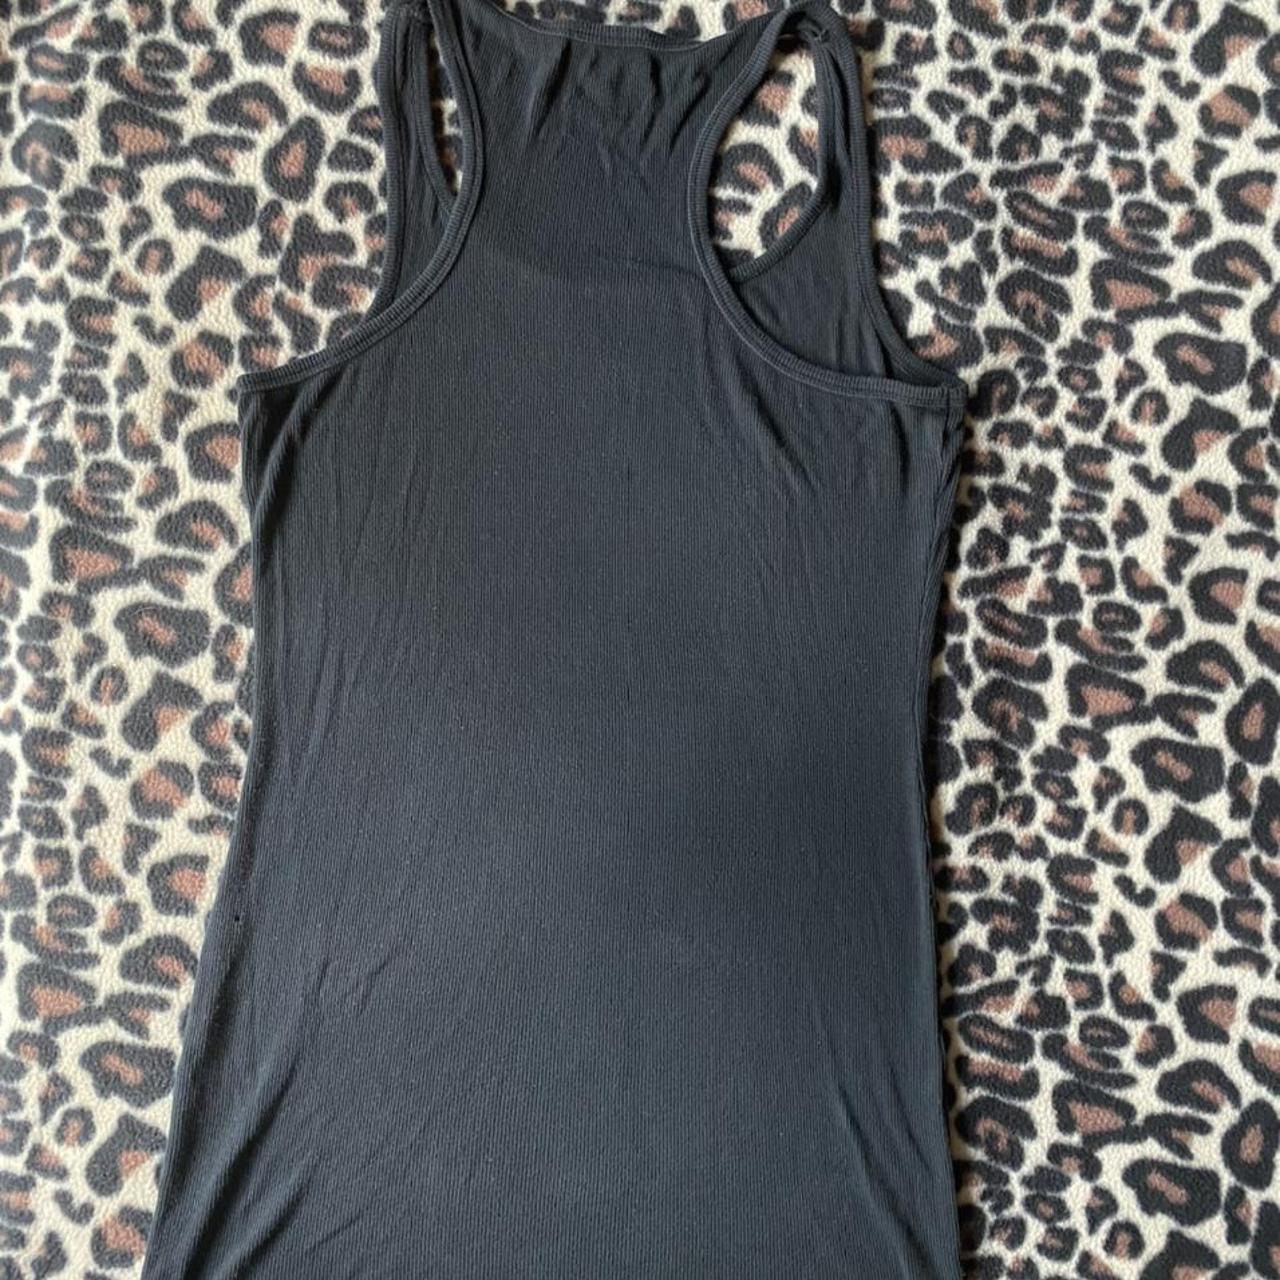 Product Image 4 - Vintage bebe mini dress. Black,